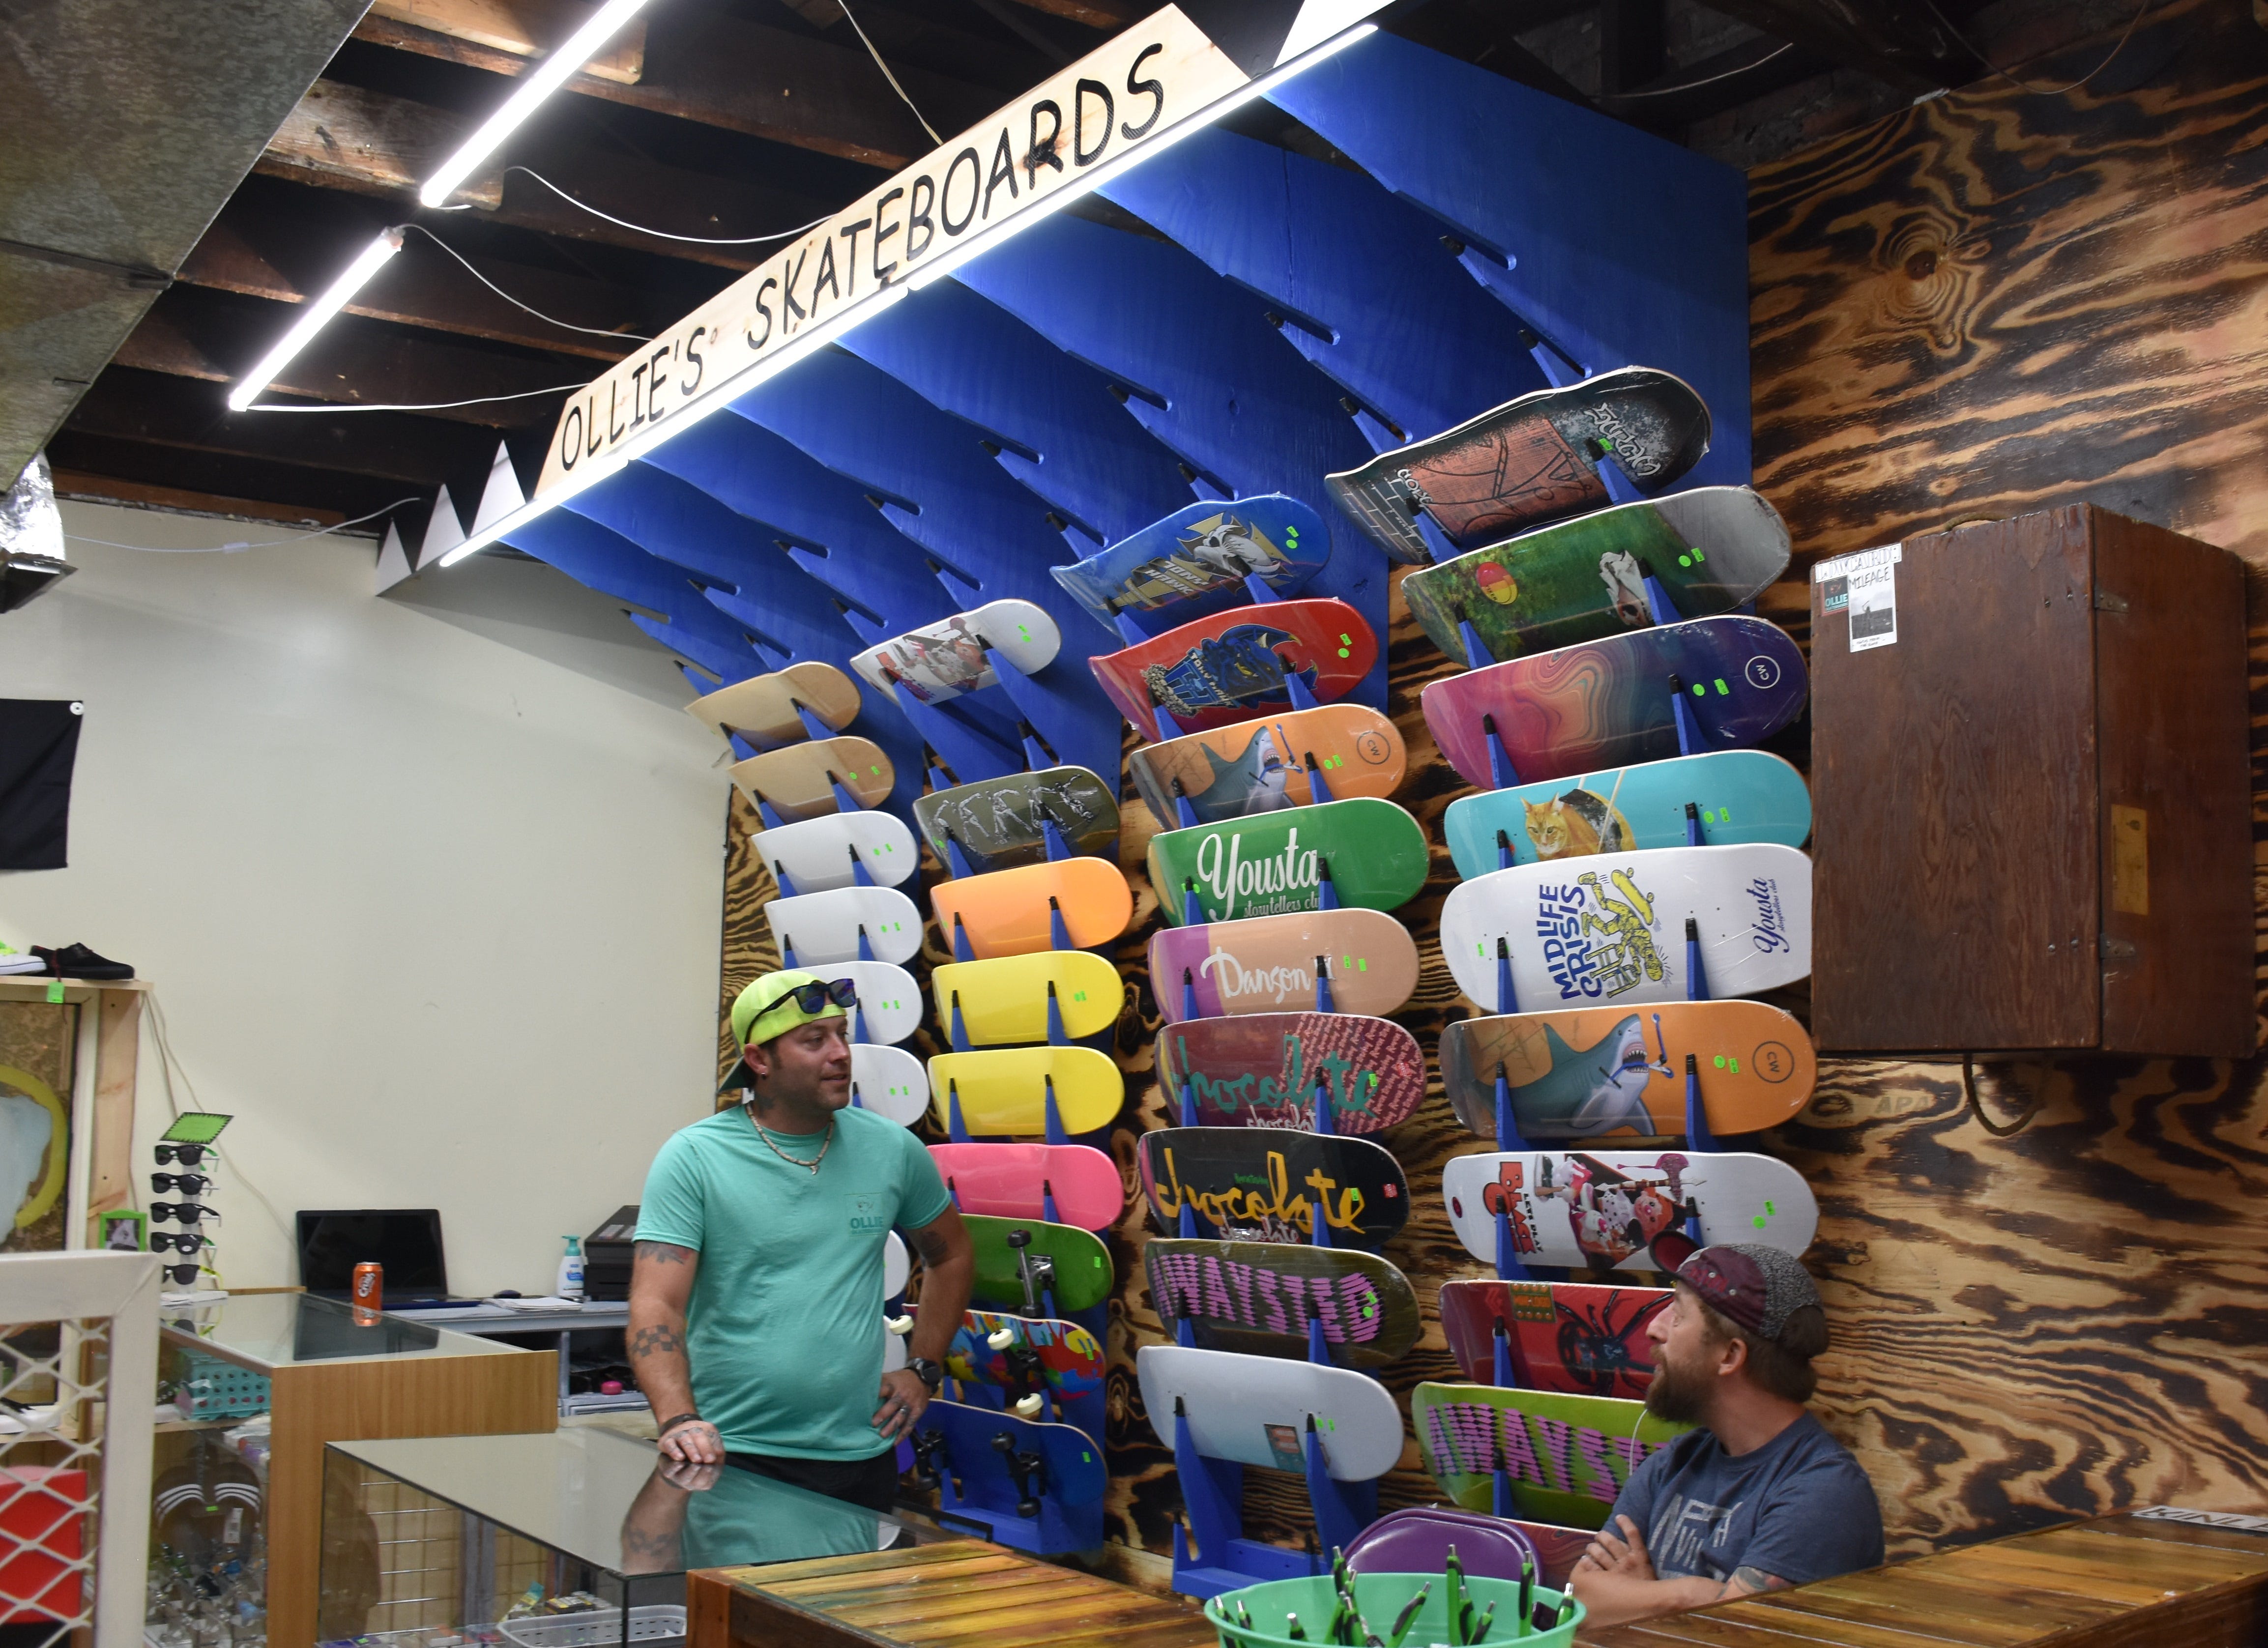 Downtown Dickson skateboard shop a friendly for skateboarders